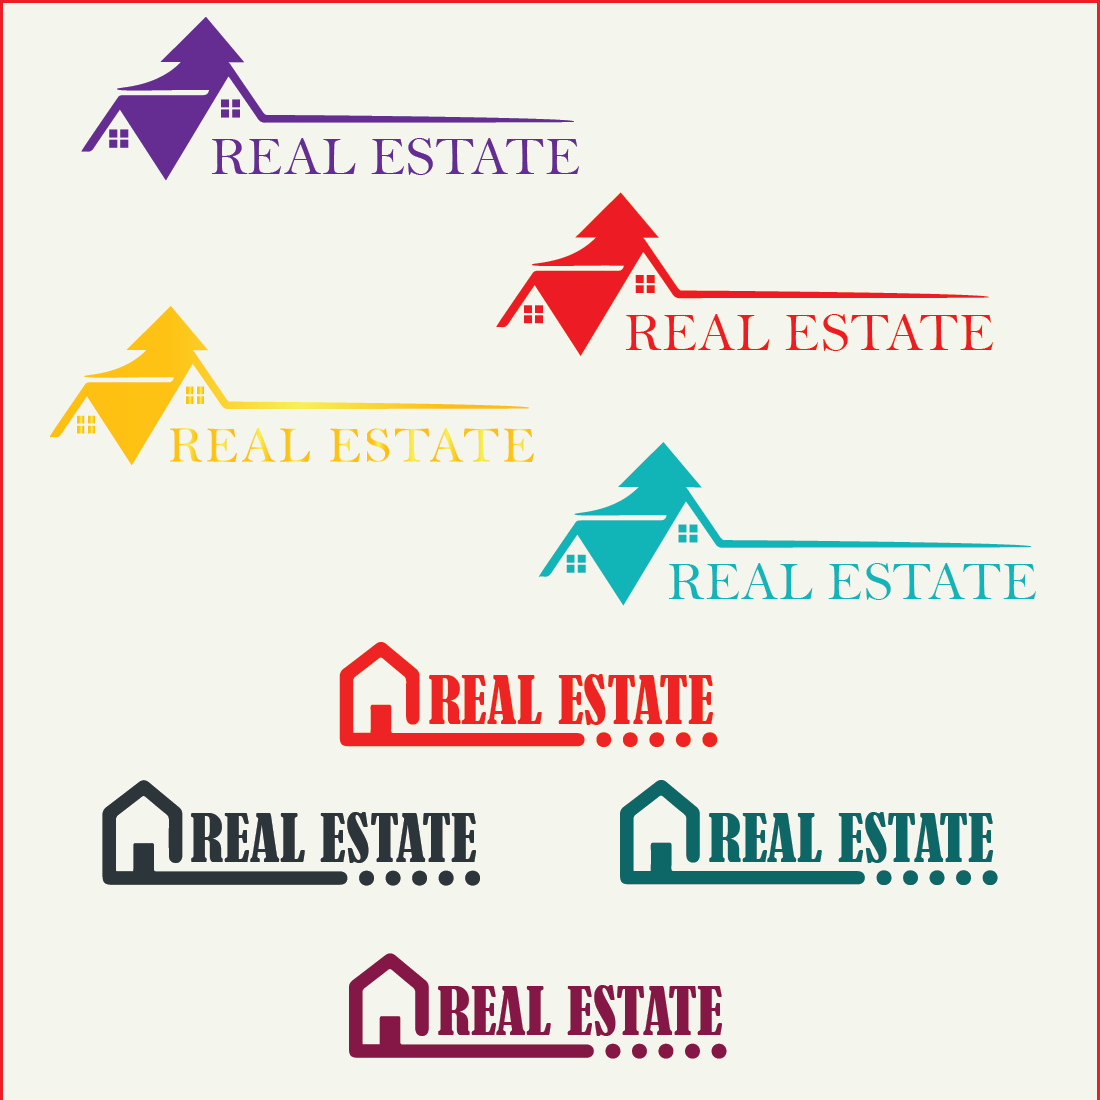 Real Estate logo templates/Unique Real Estate logos/Bundle of real estate logos preview image.